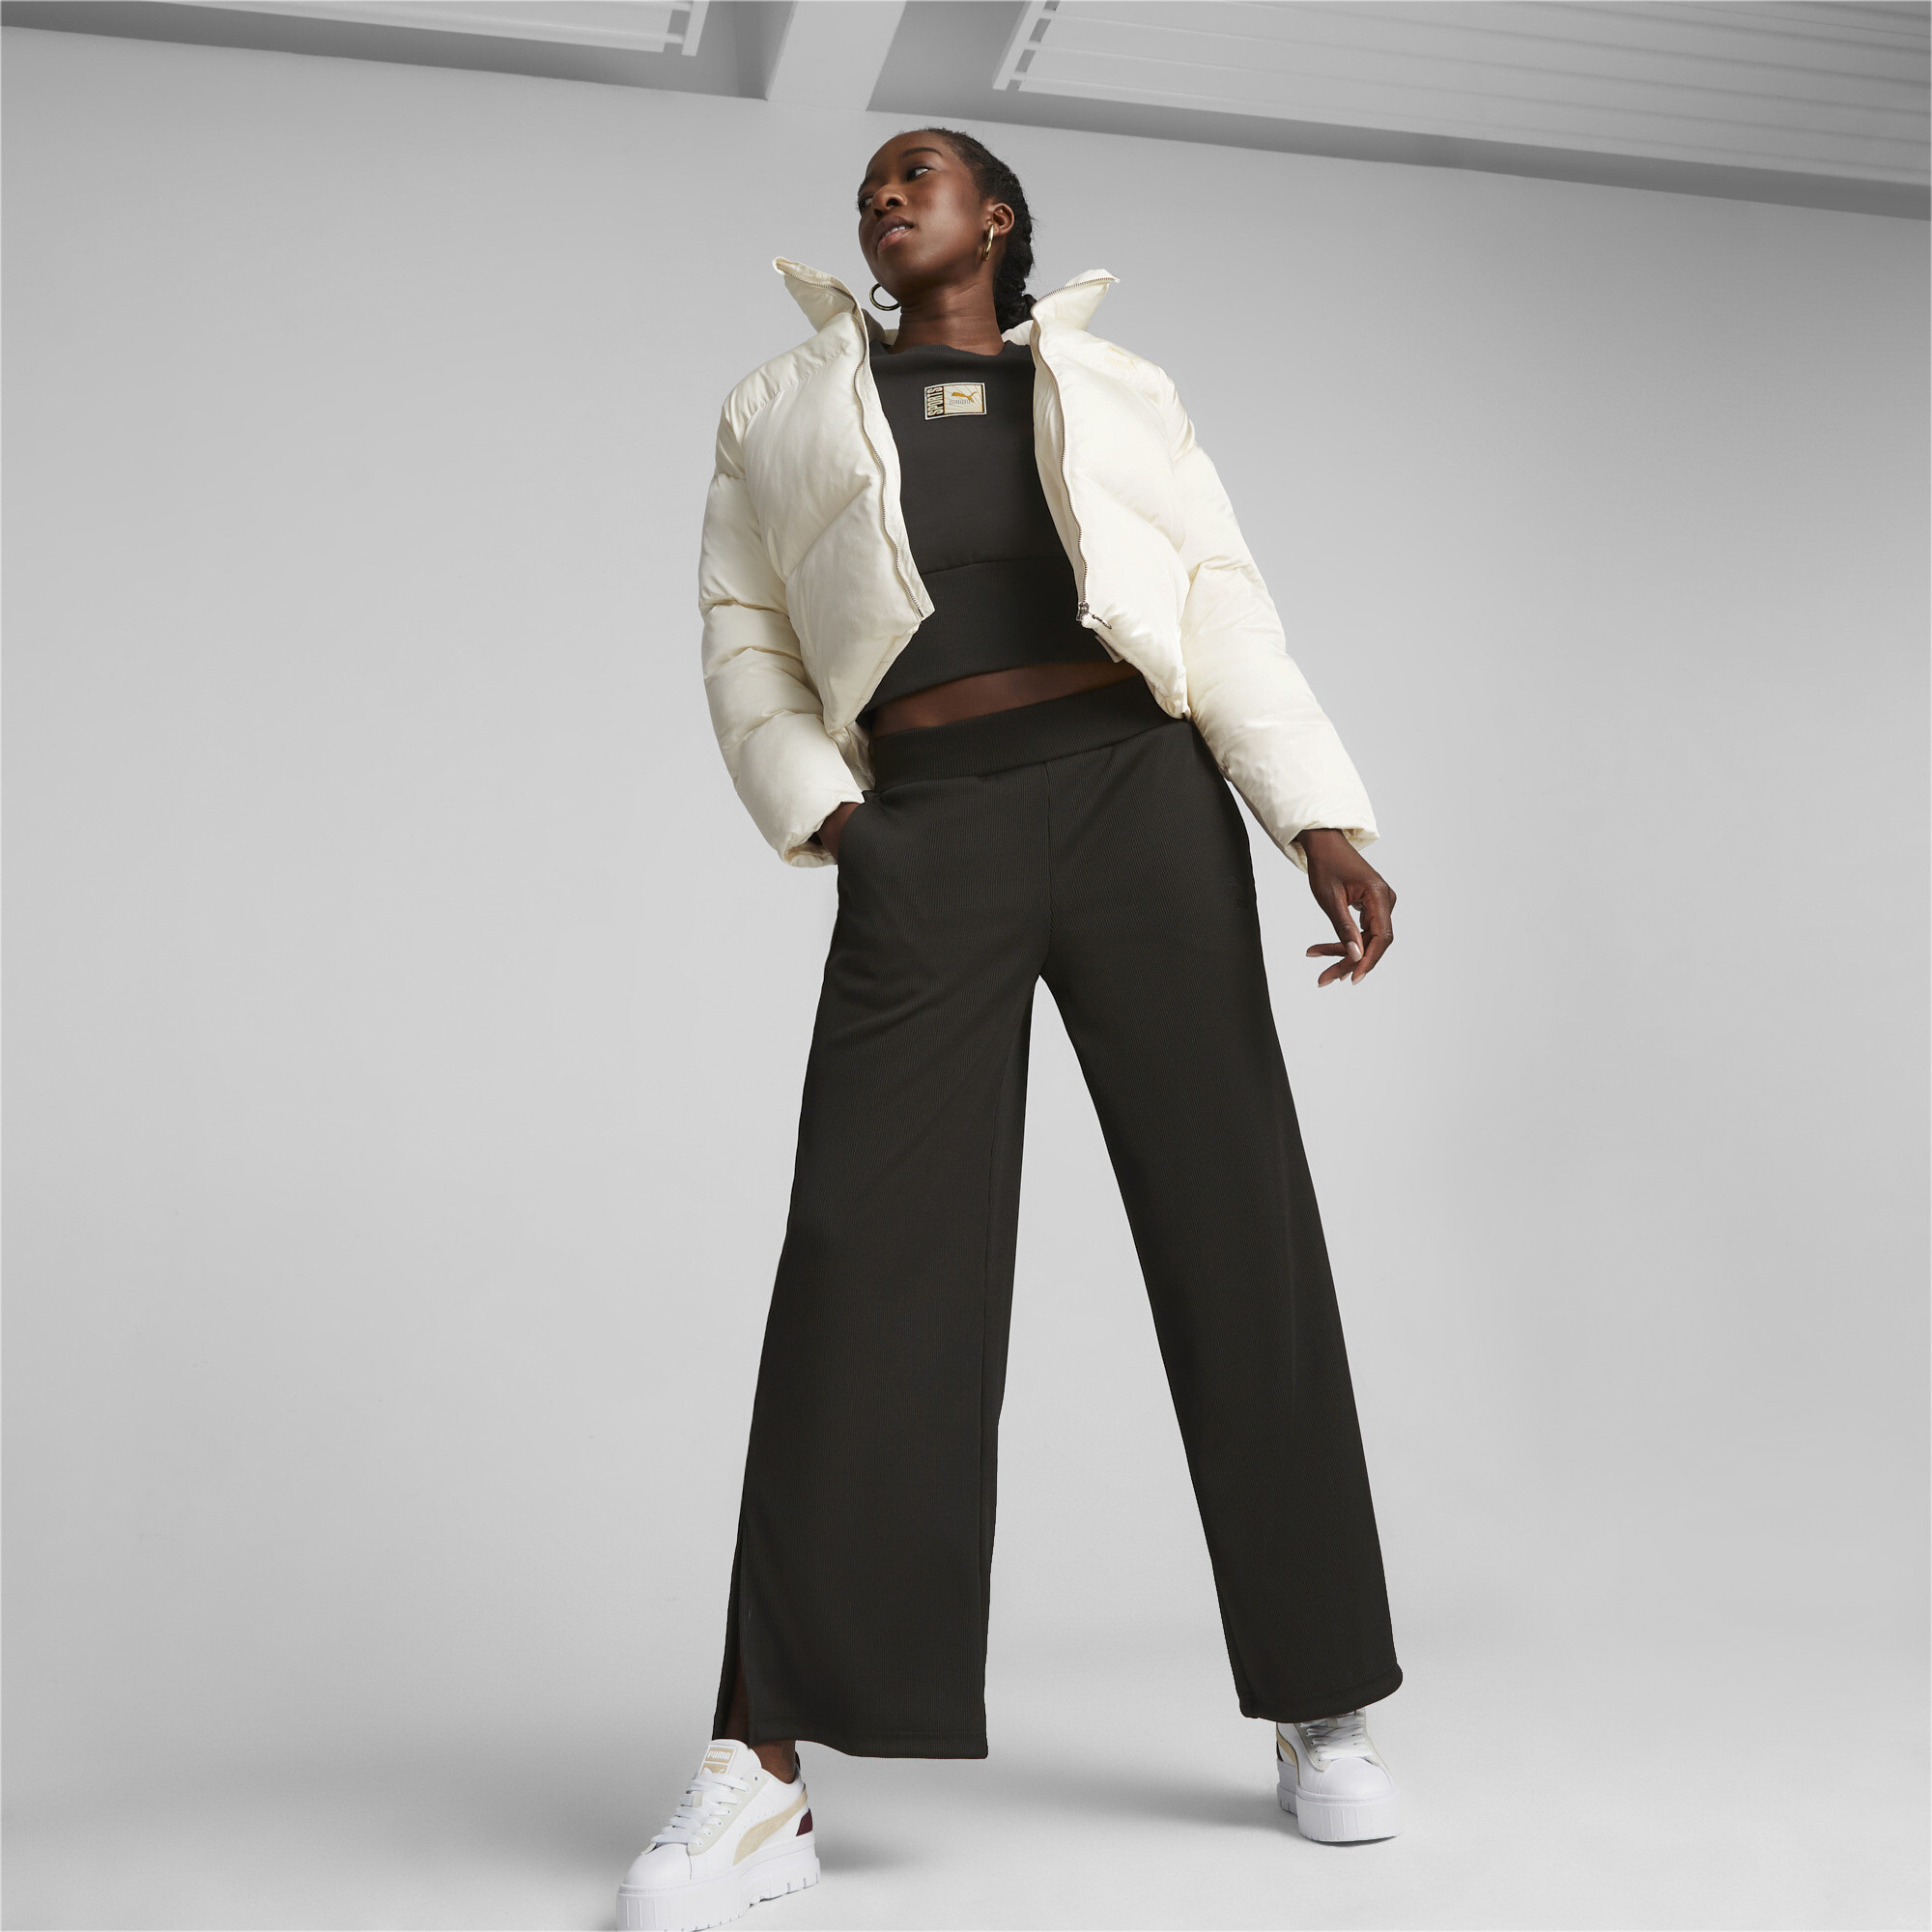 Women's Puma Classics Oversized's Puffer Jacket, White, Size L, Clothing